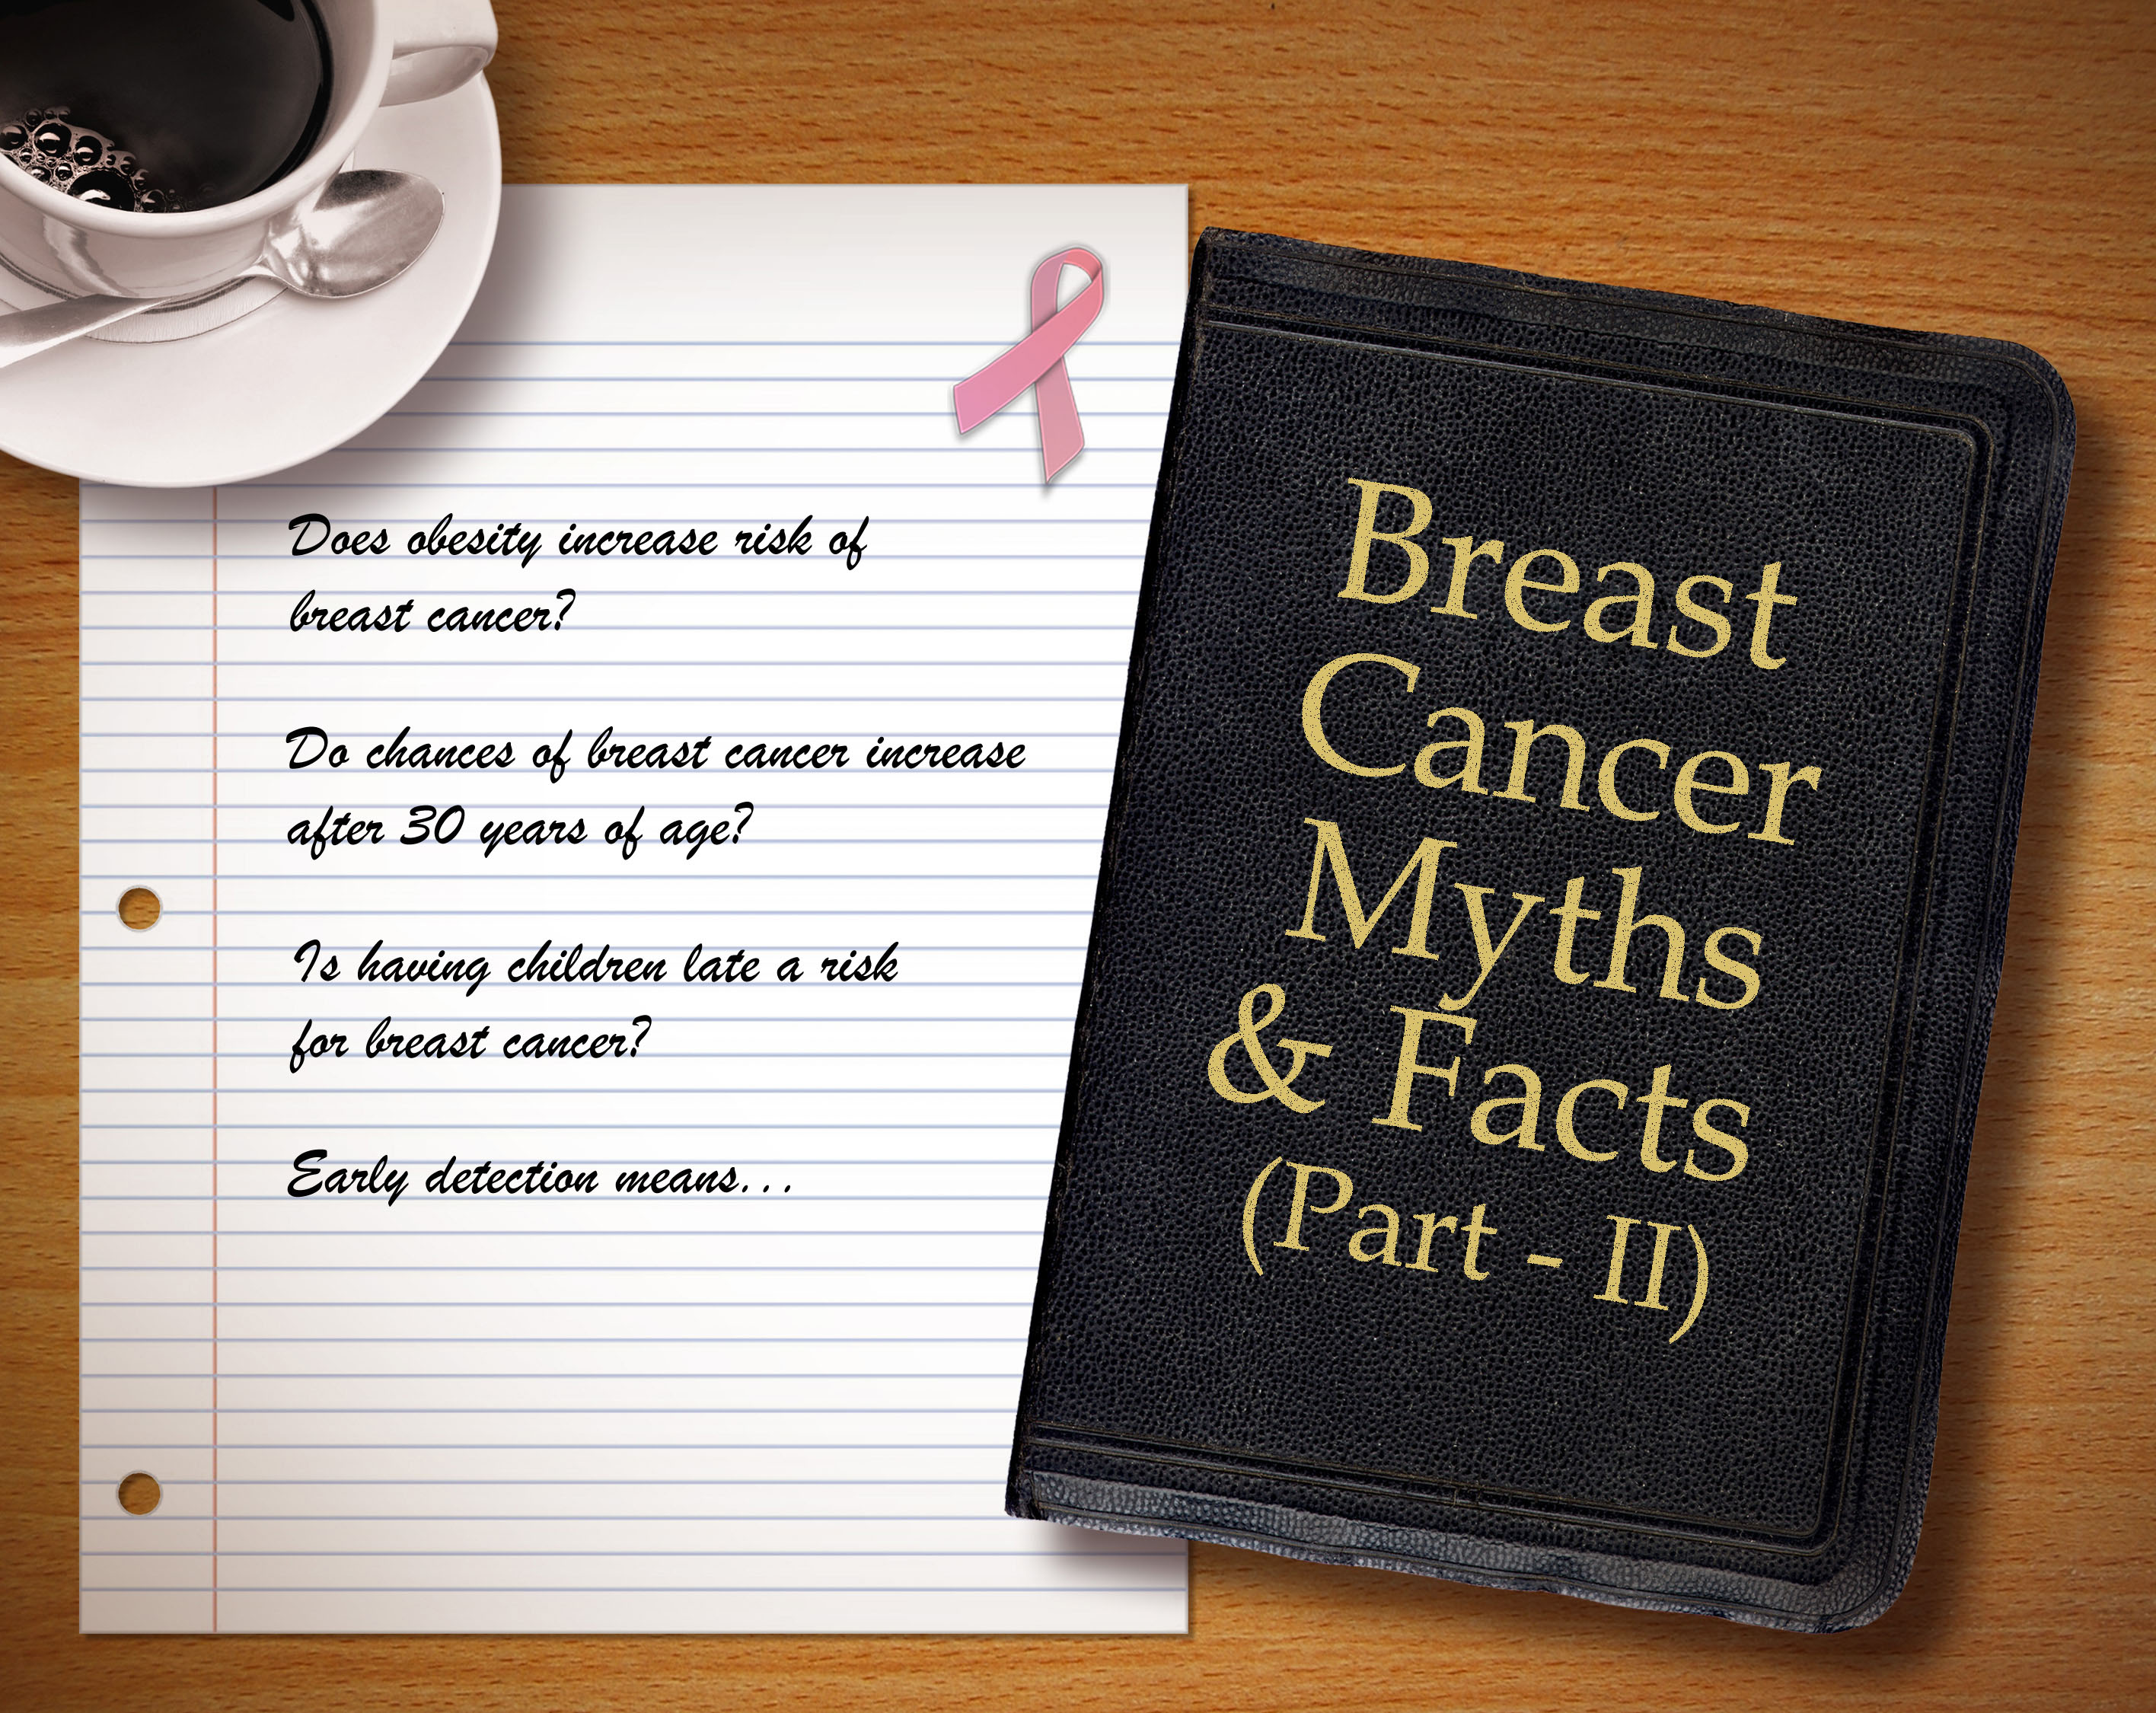 Breast-Cancer-Myths2